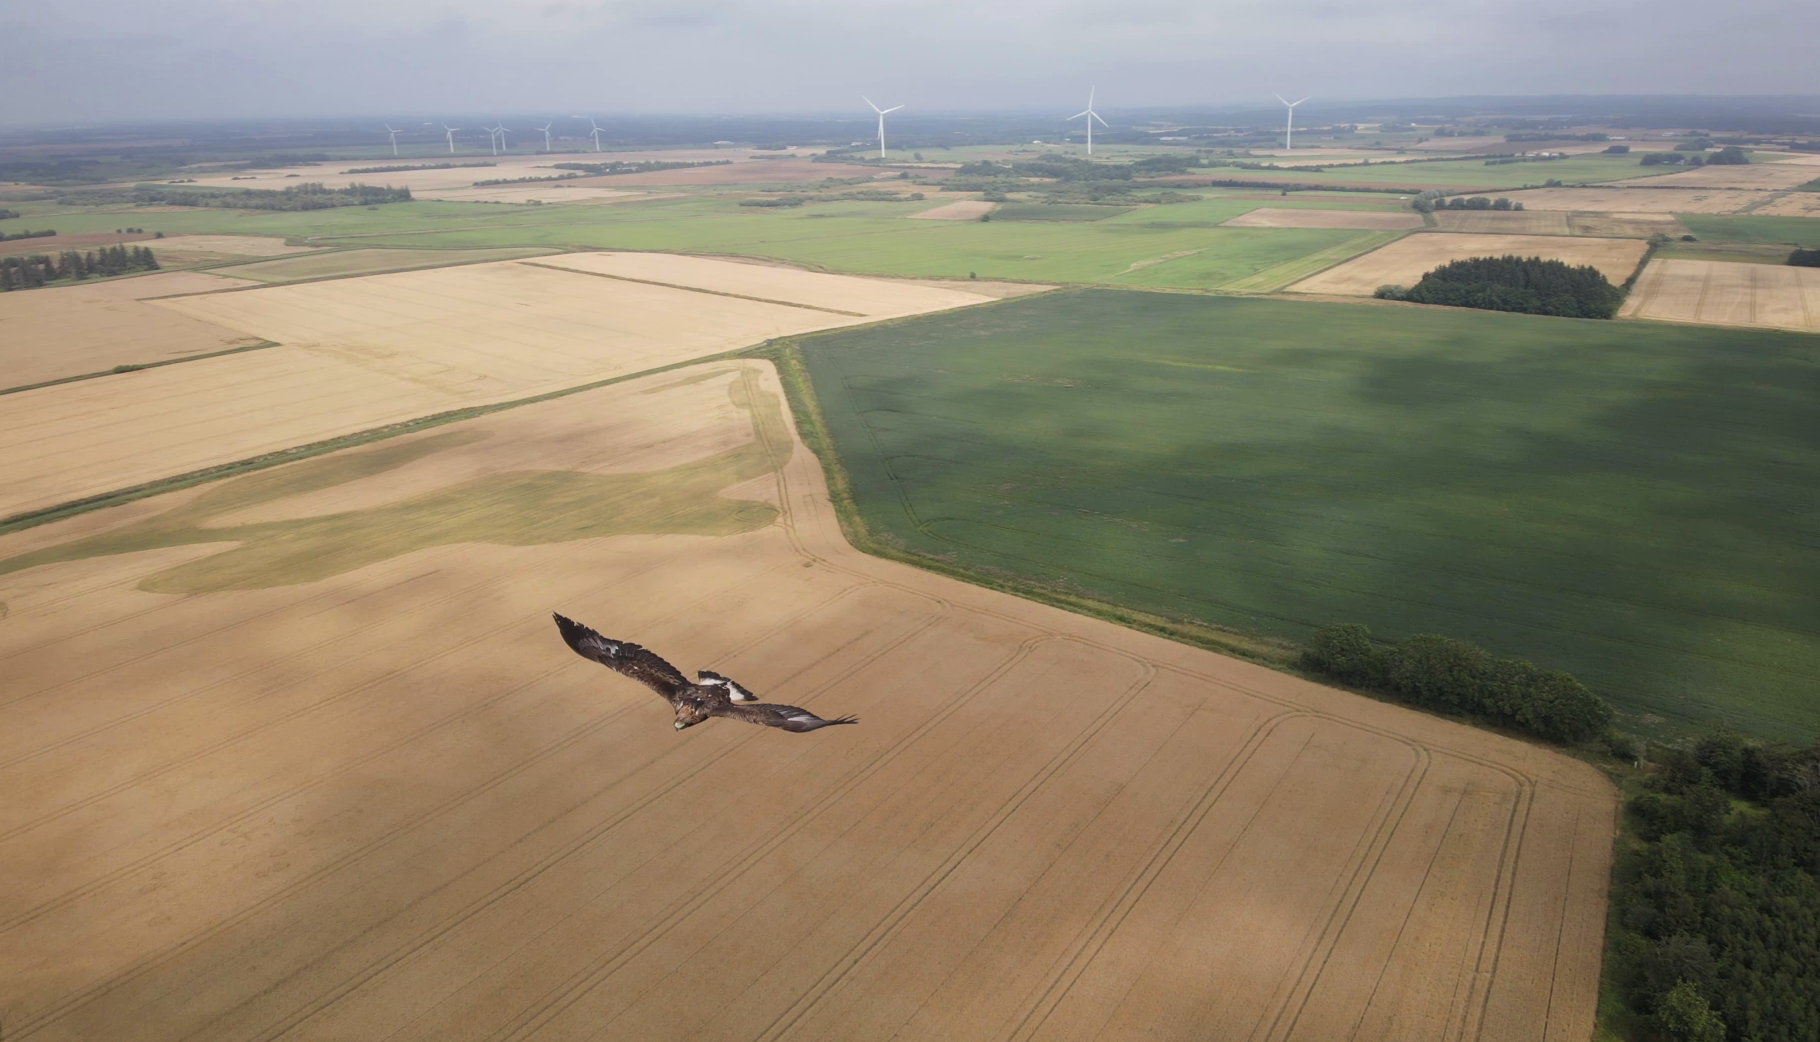  Kongeorn i naerkontakt med drone foto Peter Povlsen Aalborg Universitet